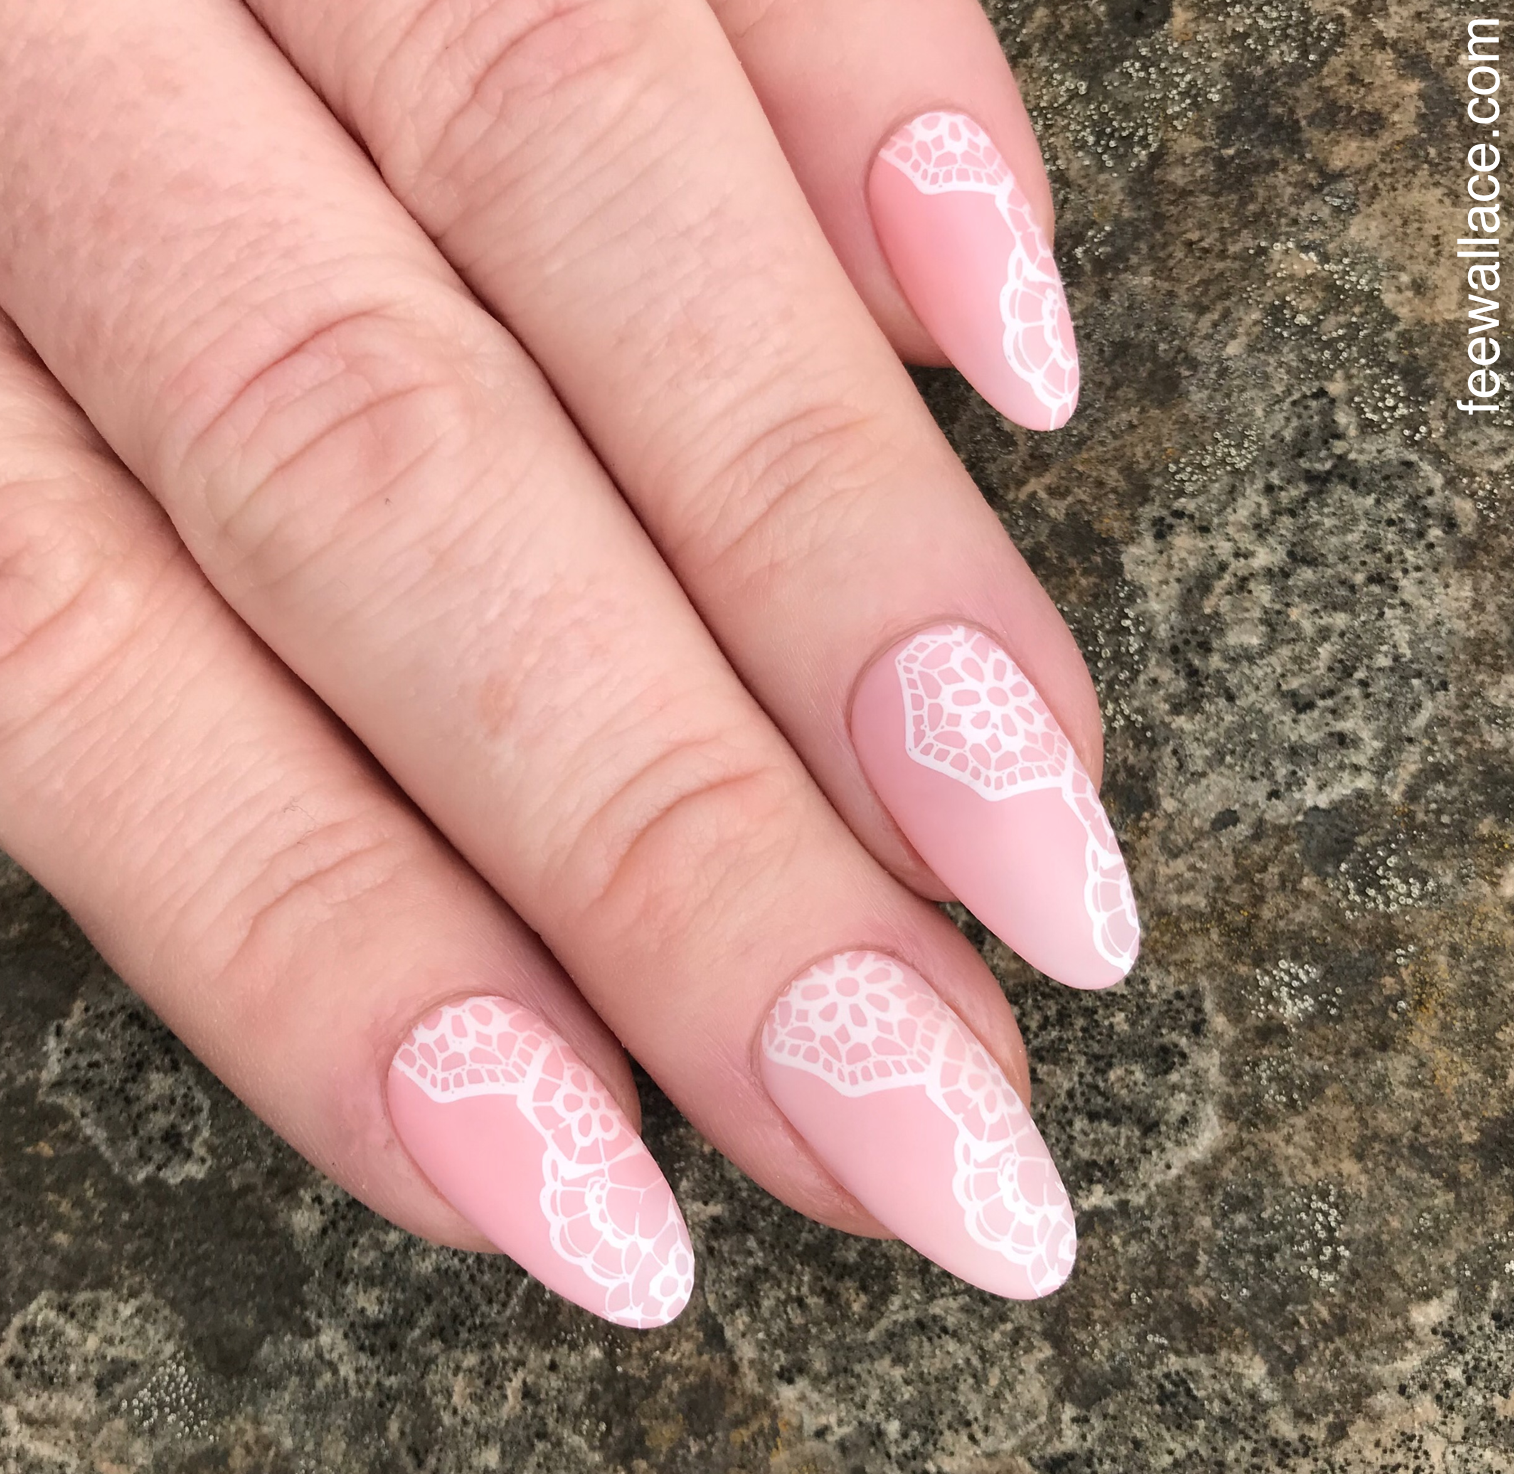 Bridal lace nails using Builder Gel and polish